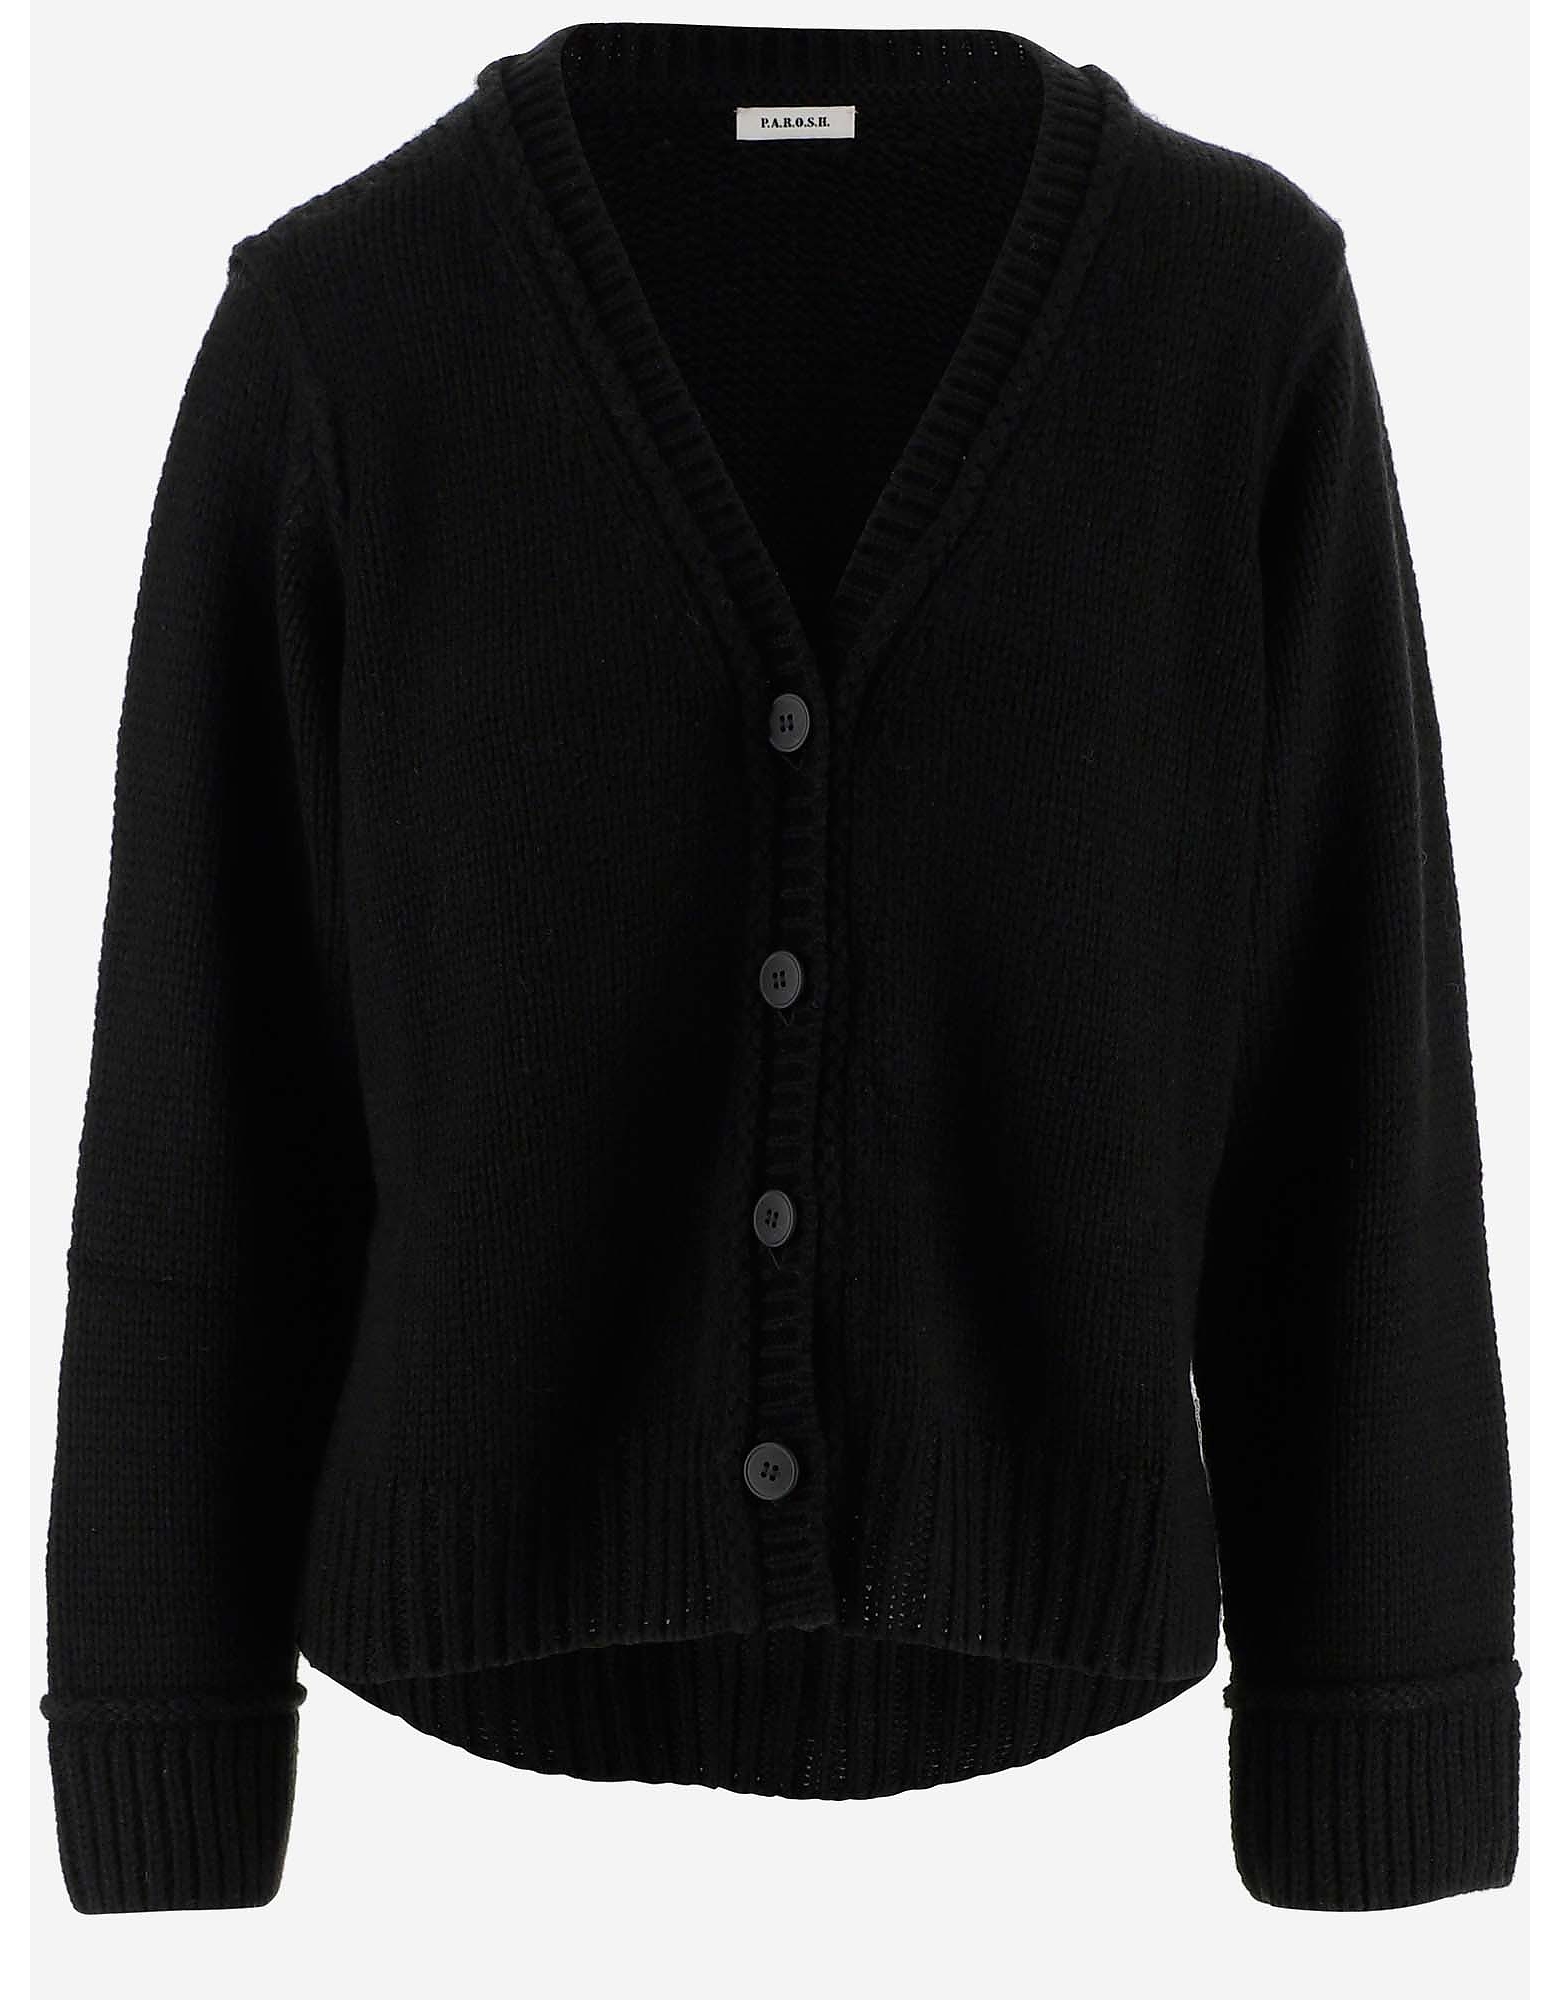 Parosh Designer Knitwear, Black Alpaca Women's Cardigan